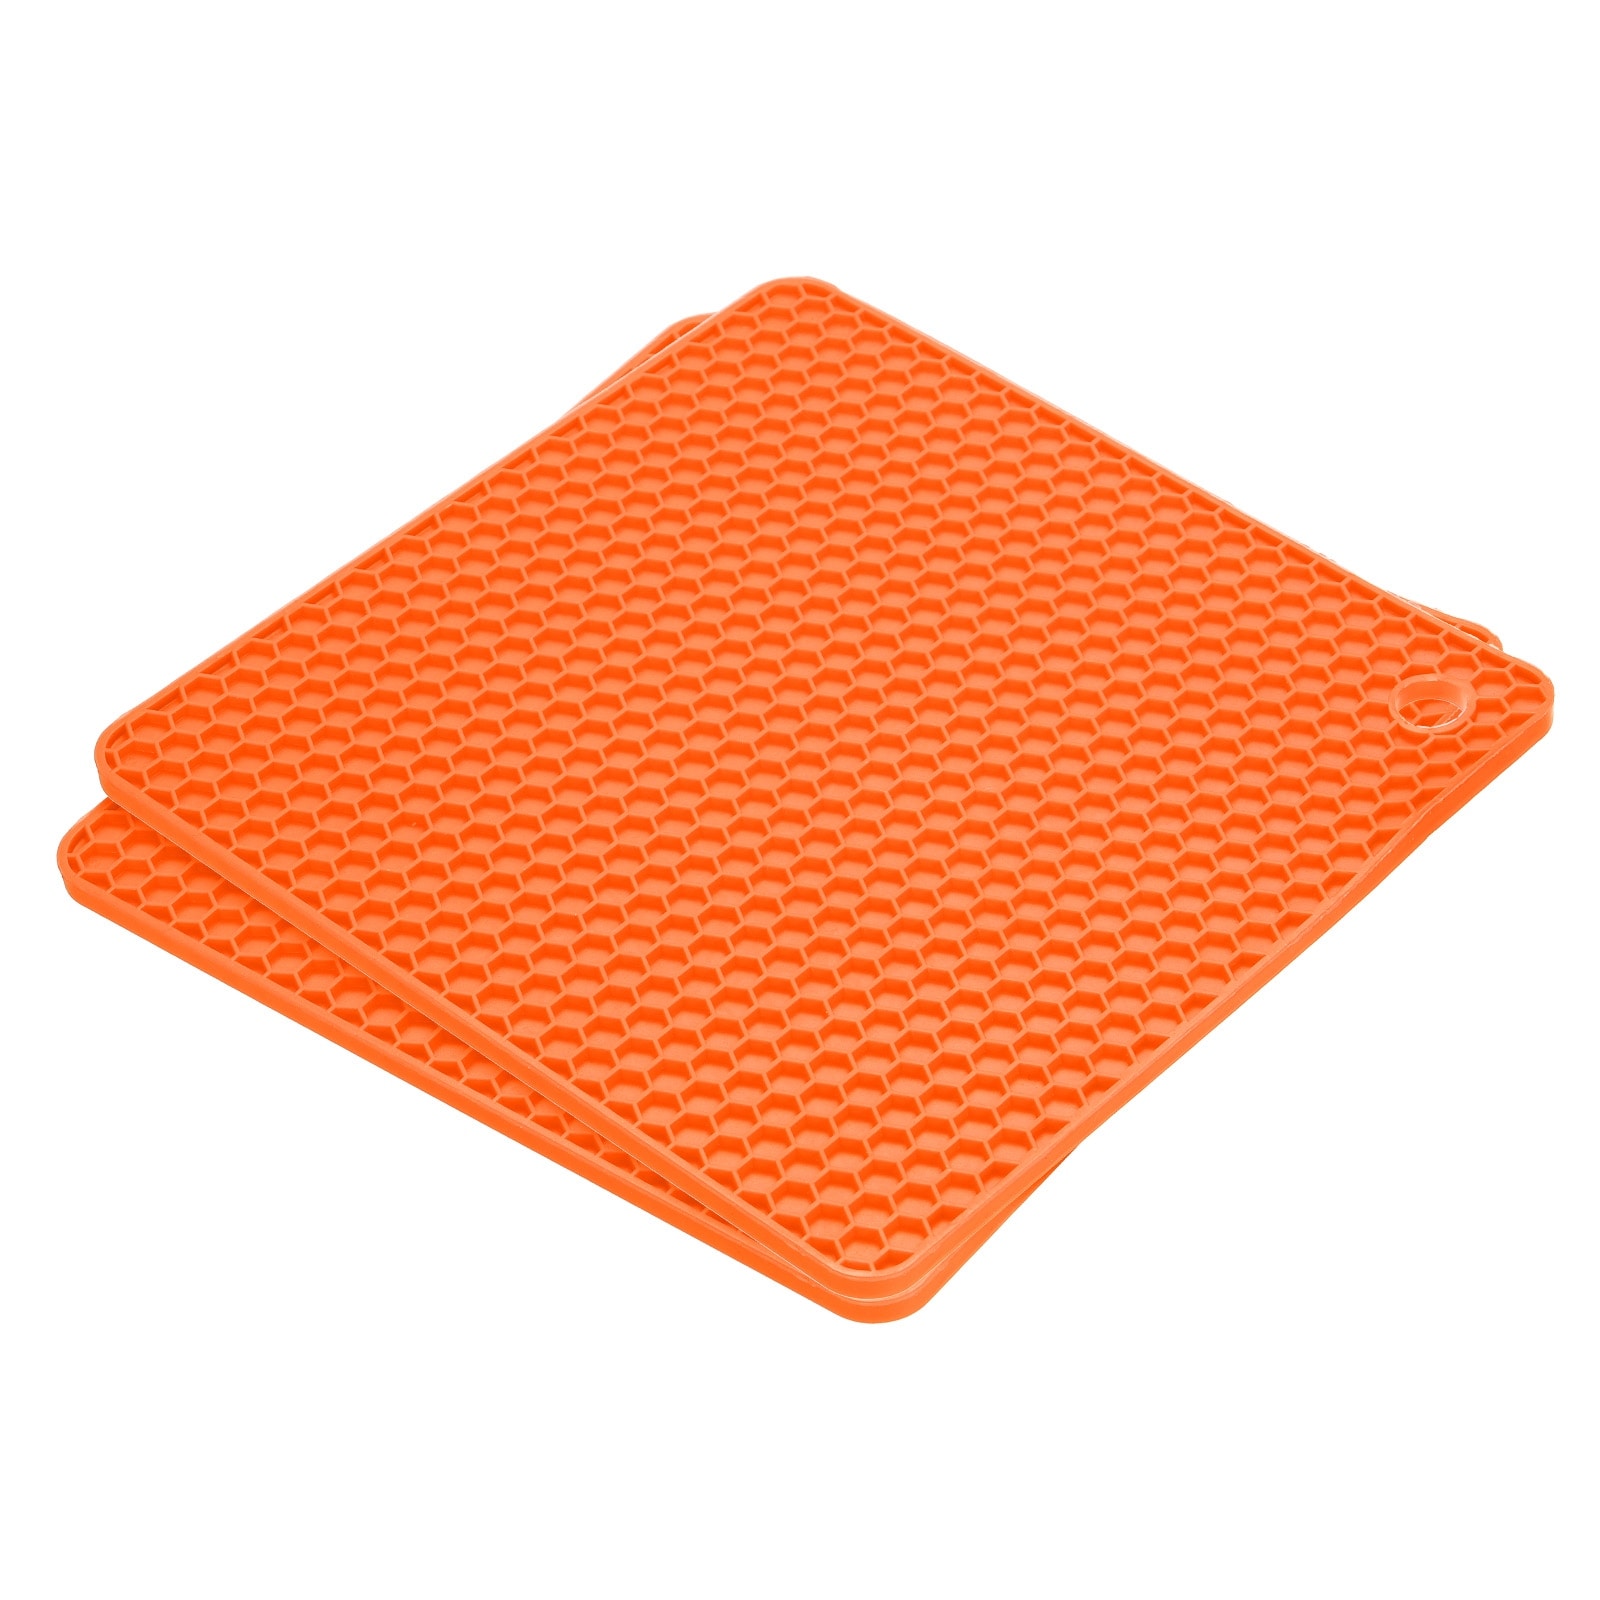 2 Pcs Large Silicone Trivet Mat For Hot Dishes/heat Resistant Pot